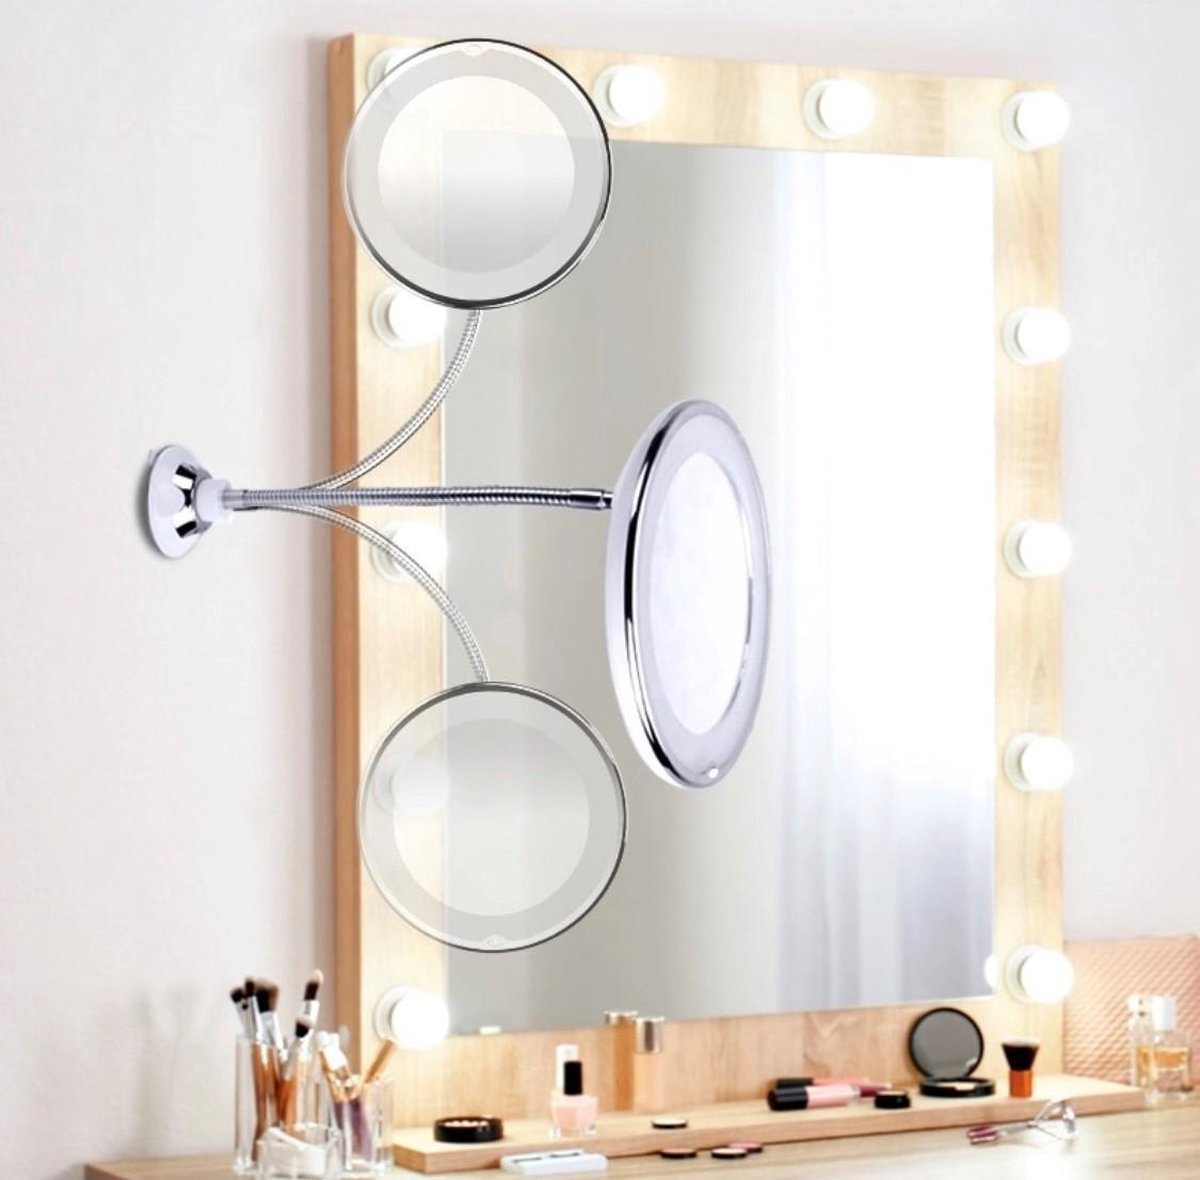 Flexibele Spiegel Met LED verlichting - Make-upspiegel - Scheerspiegel - Merkloos